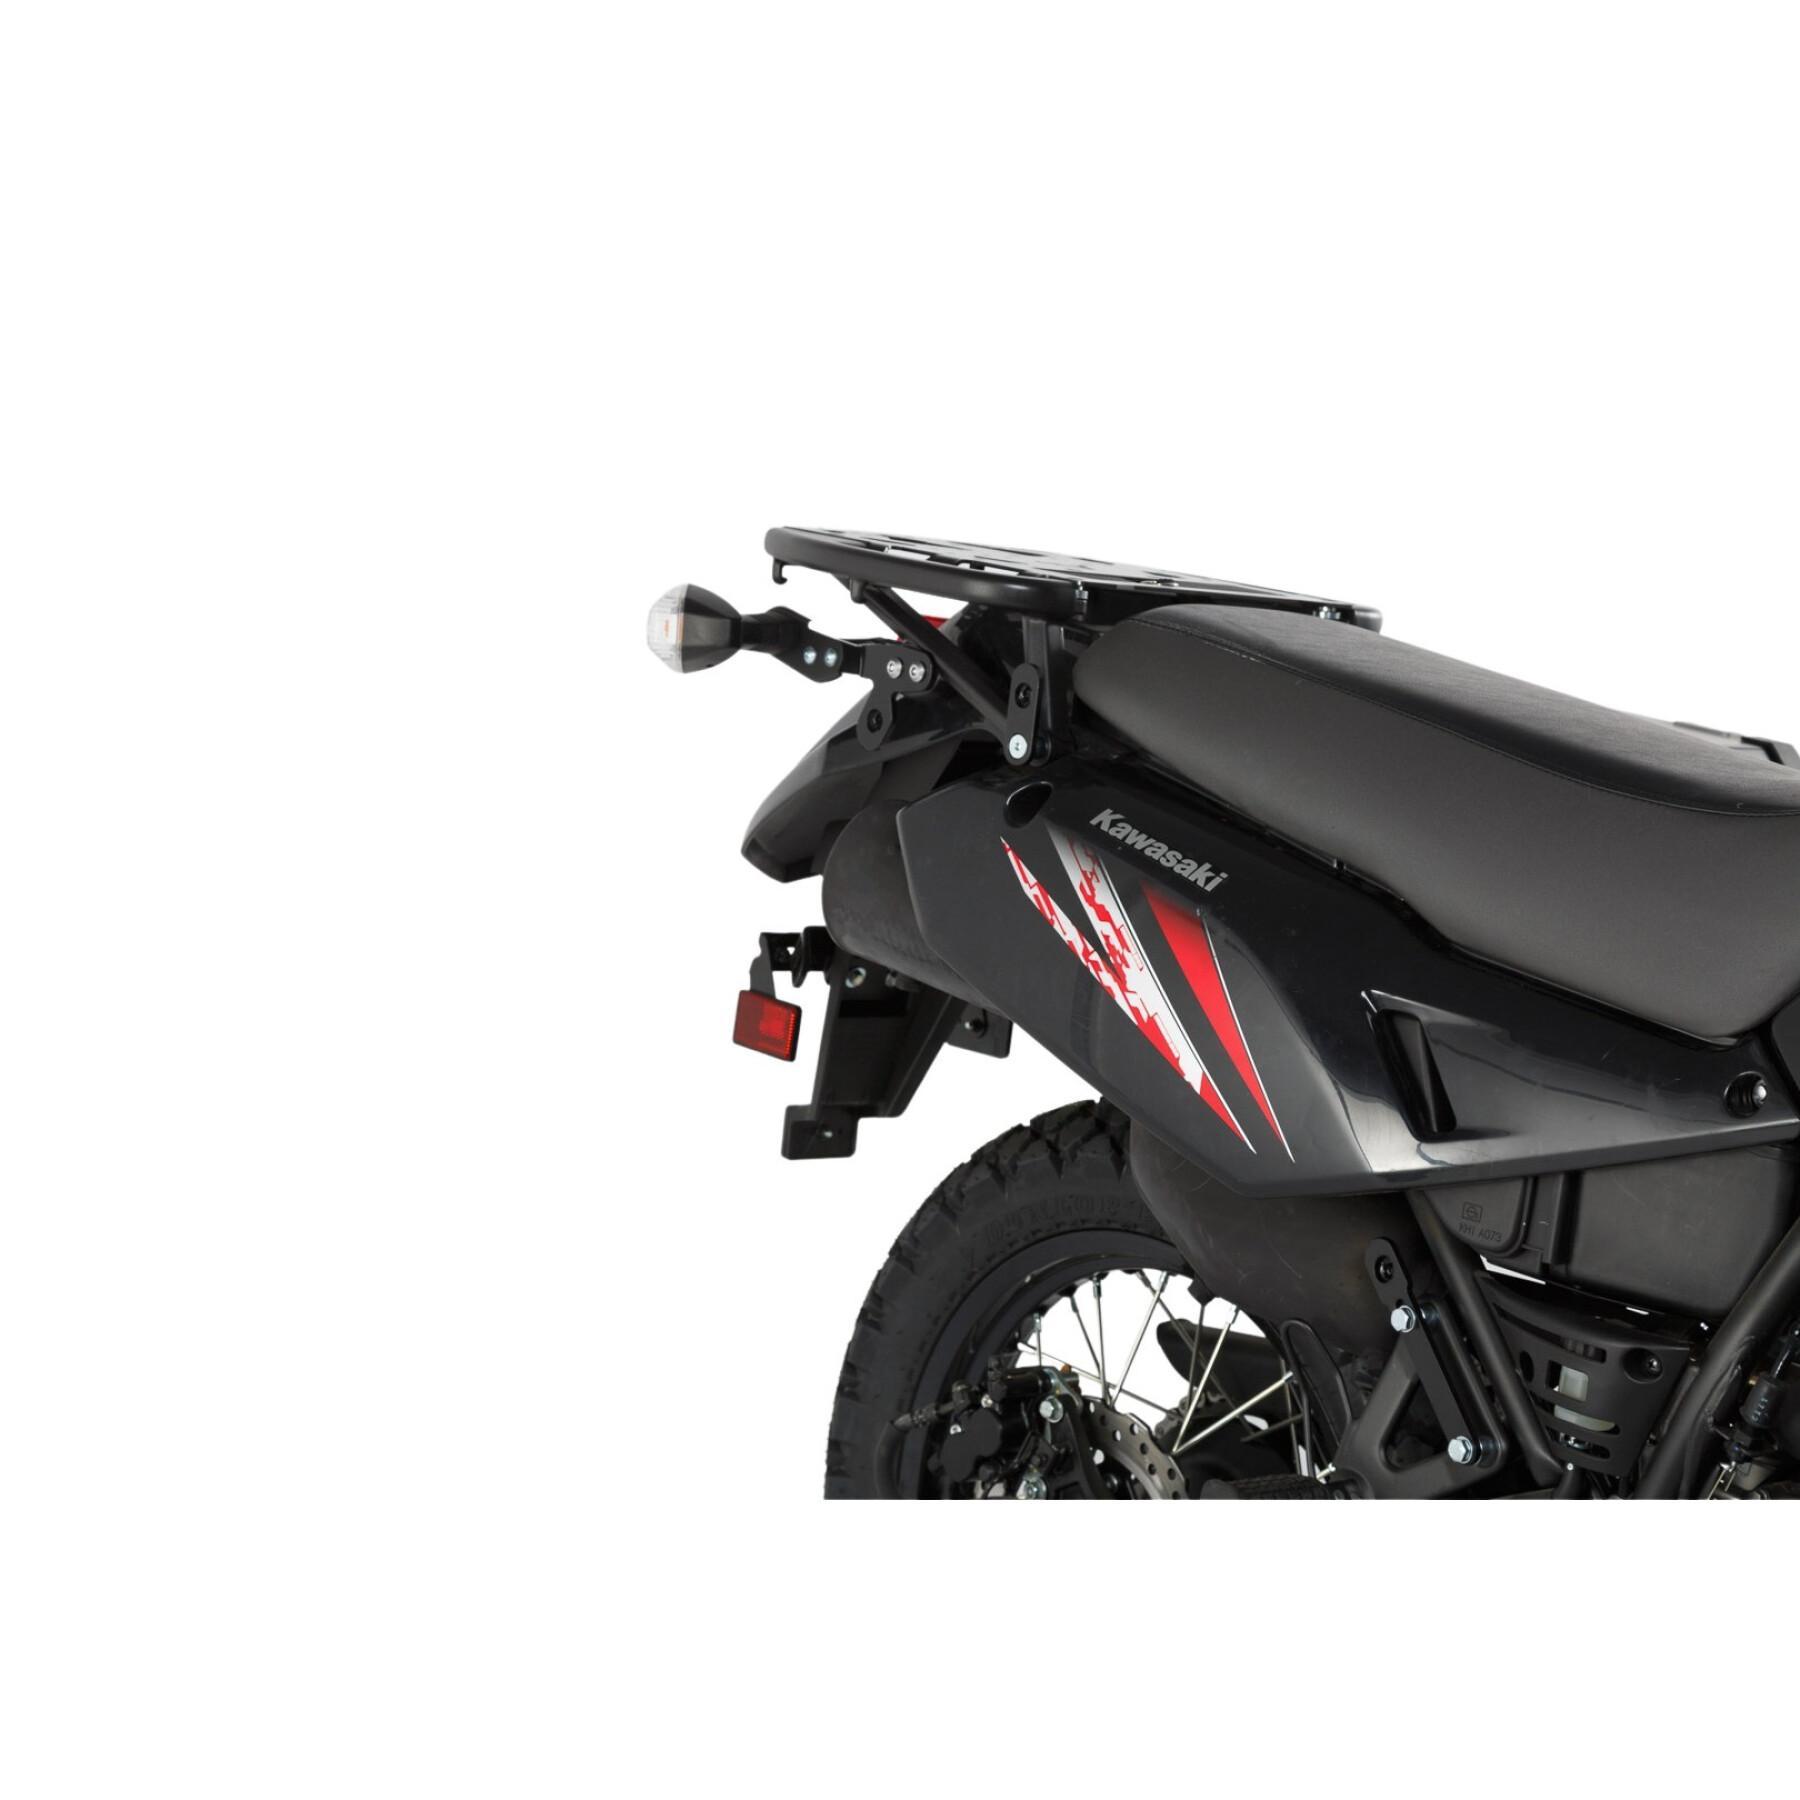 Support valises latérales moto Sw-Motech Evo. Renforcé. Kawasaki Klr650 (08-)